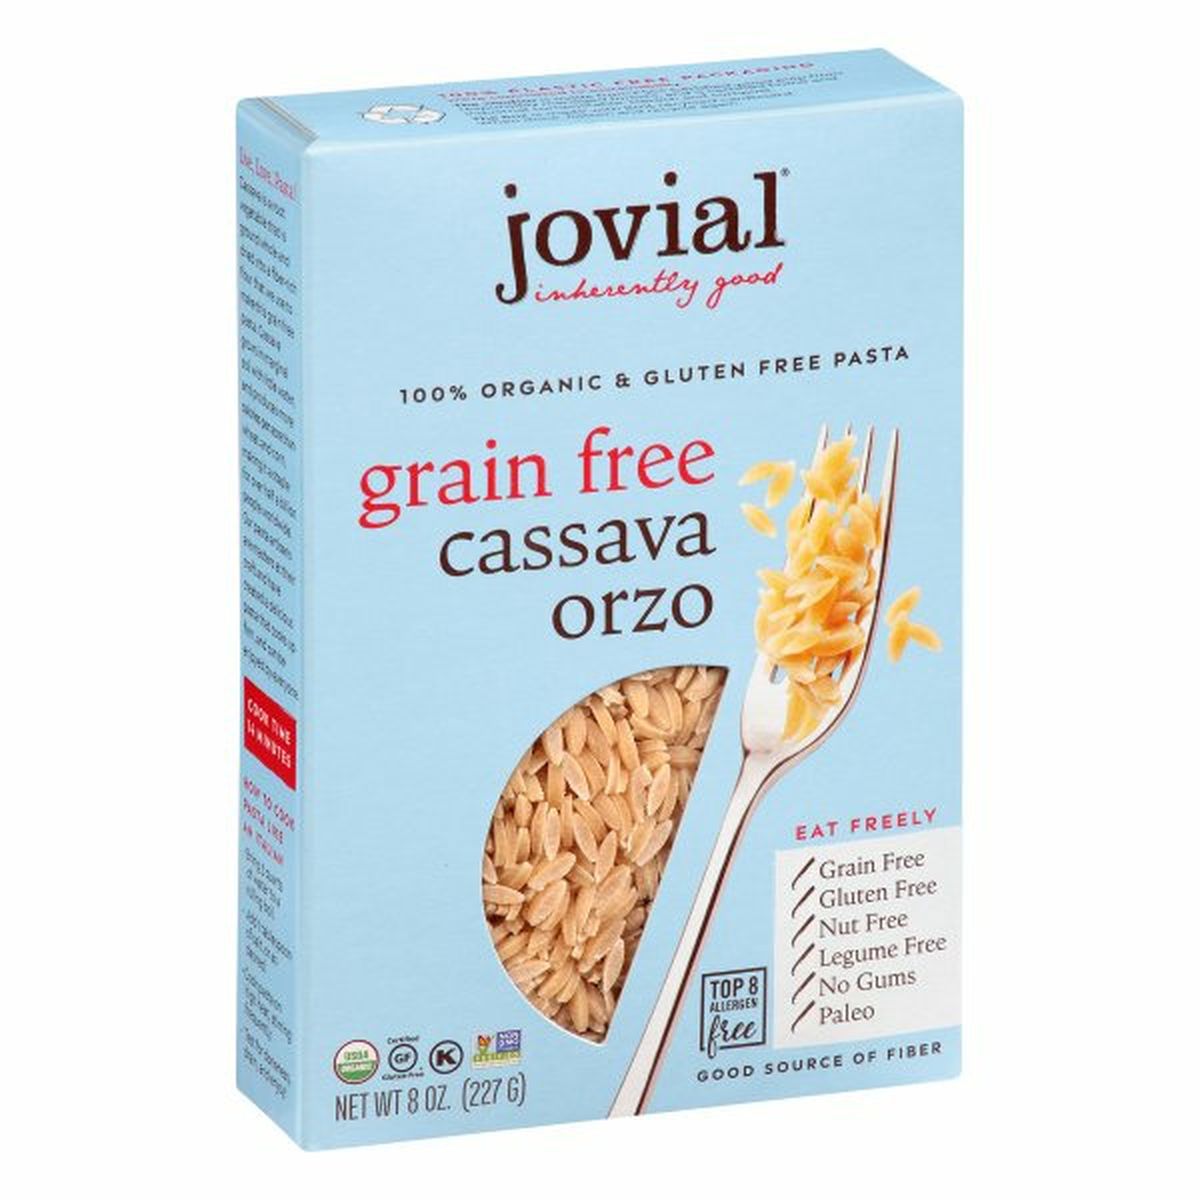 Calories in Jovial Cassava Orzo, Grain Free